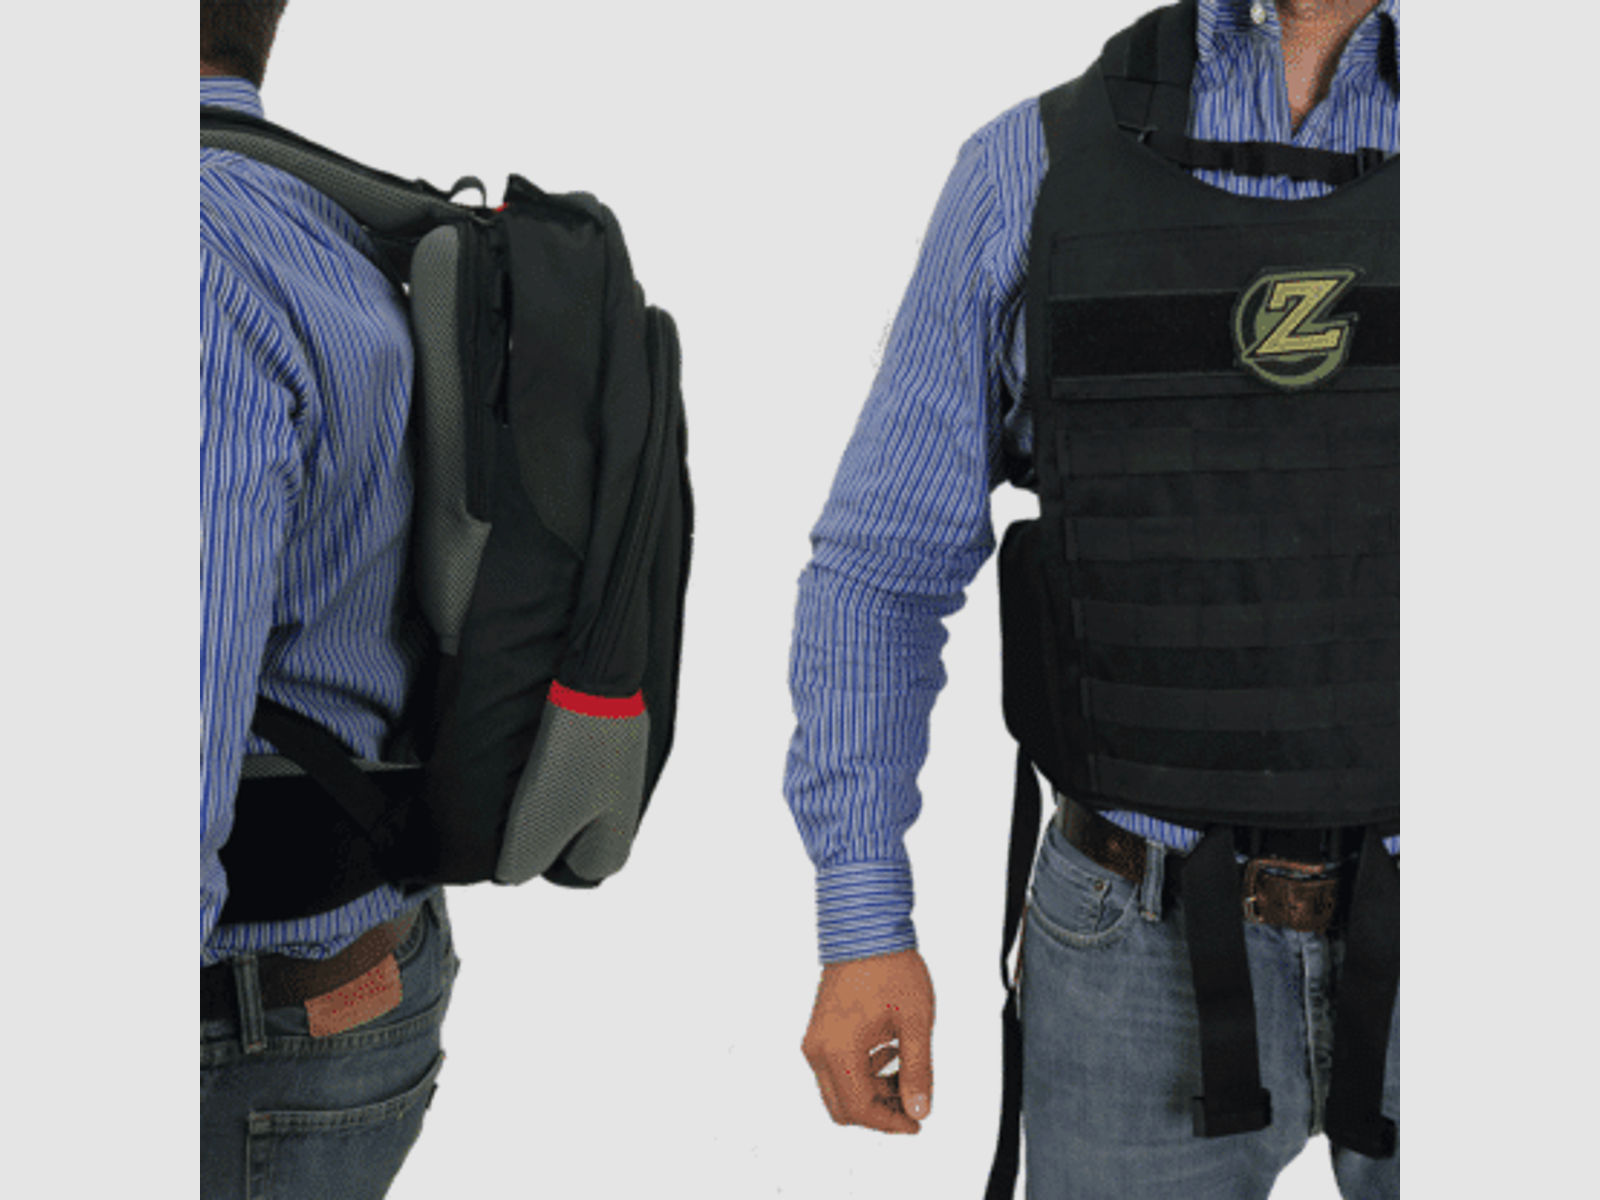 Masada bulletproof Backpack